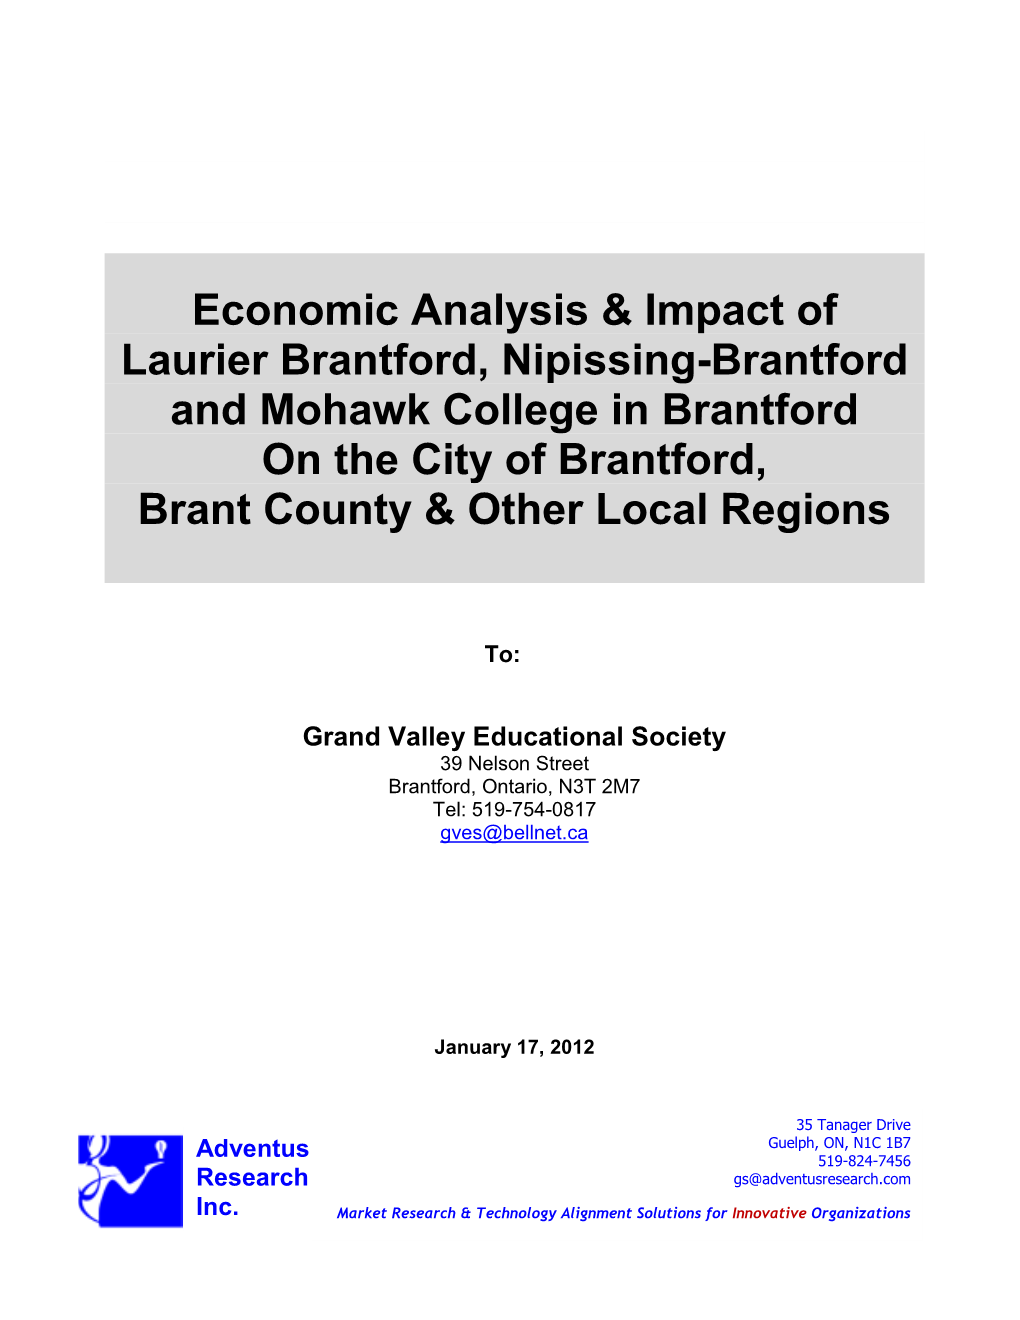 Brantford, Brant County & Communities